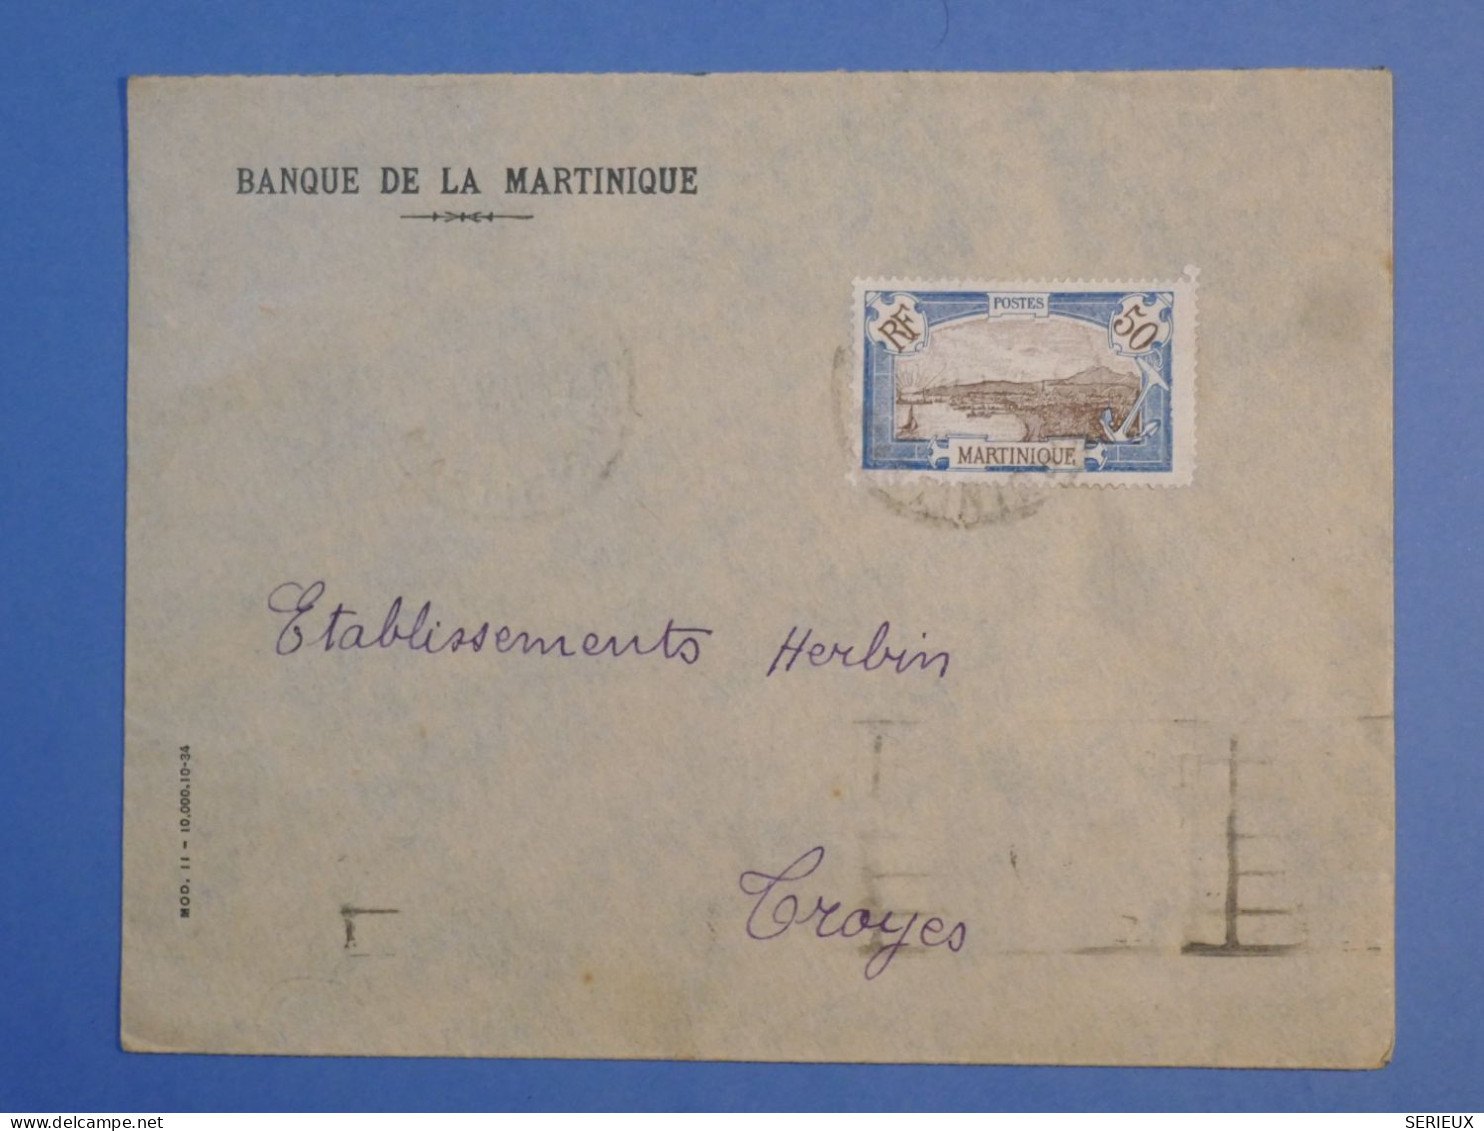 DK 12 MARTINIQUE   BELLE LETTRE    BANQUE 1935 A TROYES  FRANCE ++AFF. INTERESSANT++++ + - Lettres & Documents